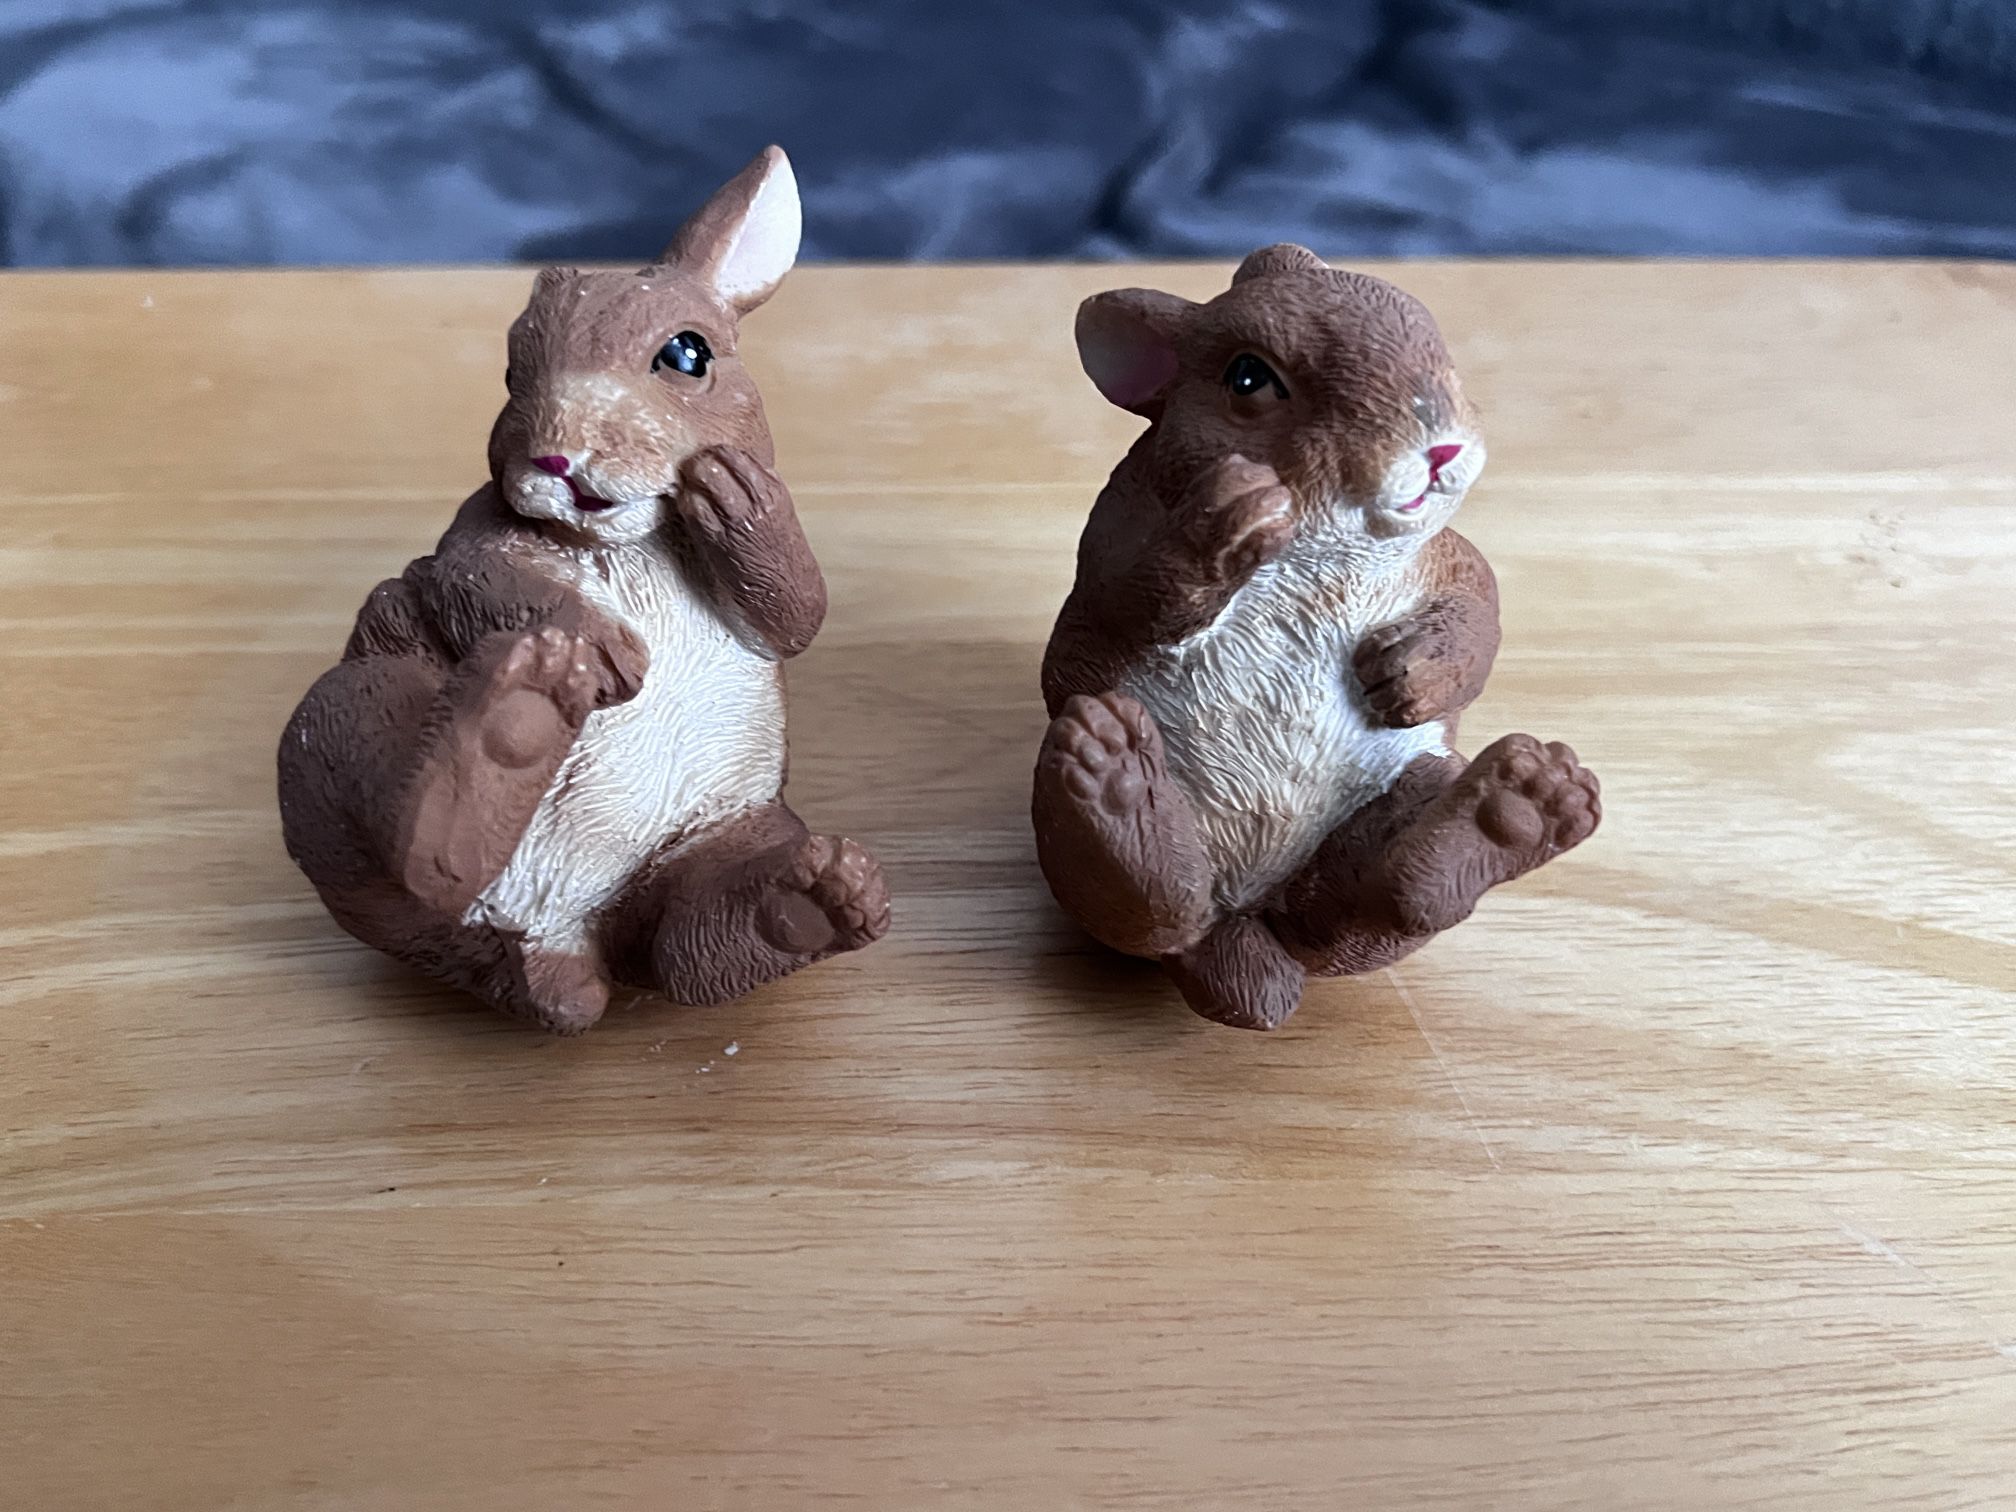 Pair Of Resign Bunny Rabbit Figurines 